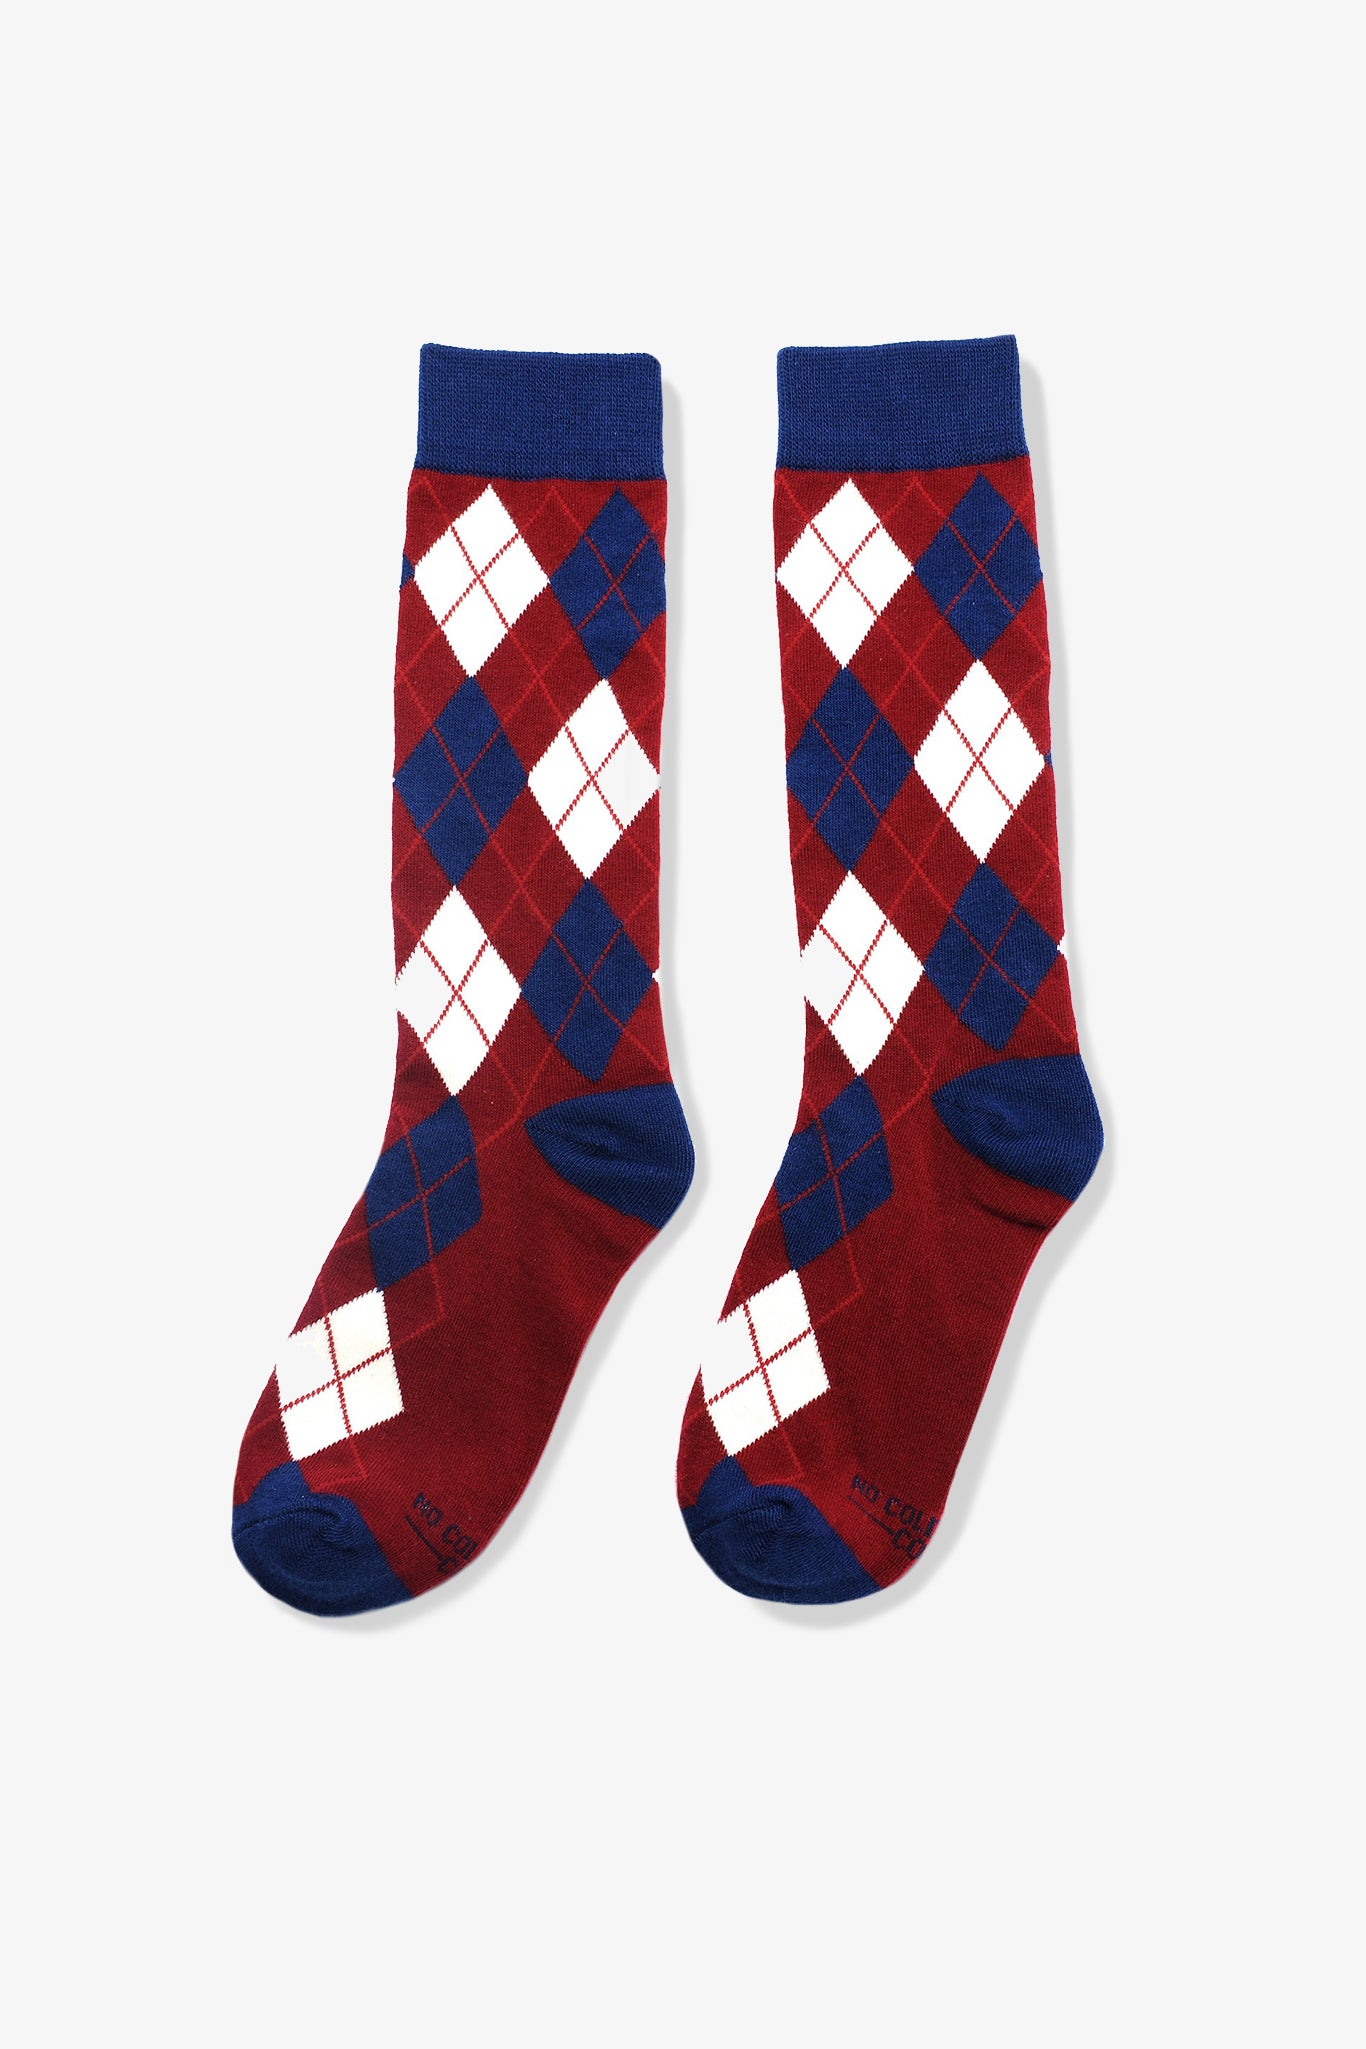 Argyle Groomsmen Socks By No Cold Feet - Burgundy